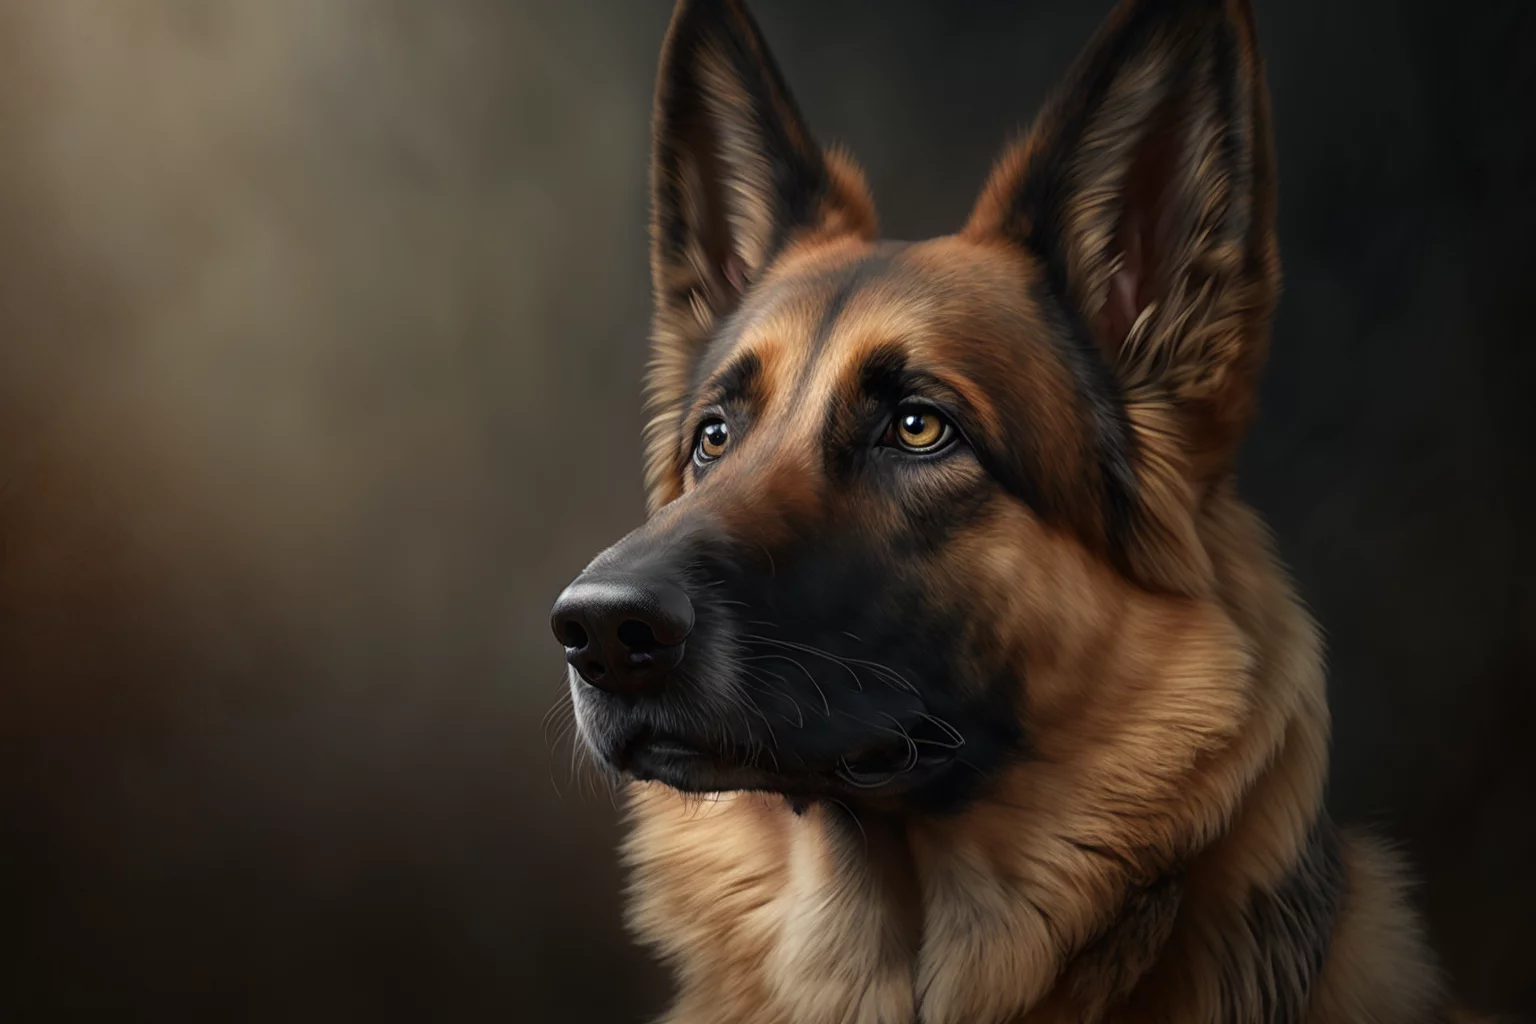 German shepherd portrait: CGI VFX SFX hyperminimalistic